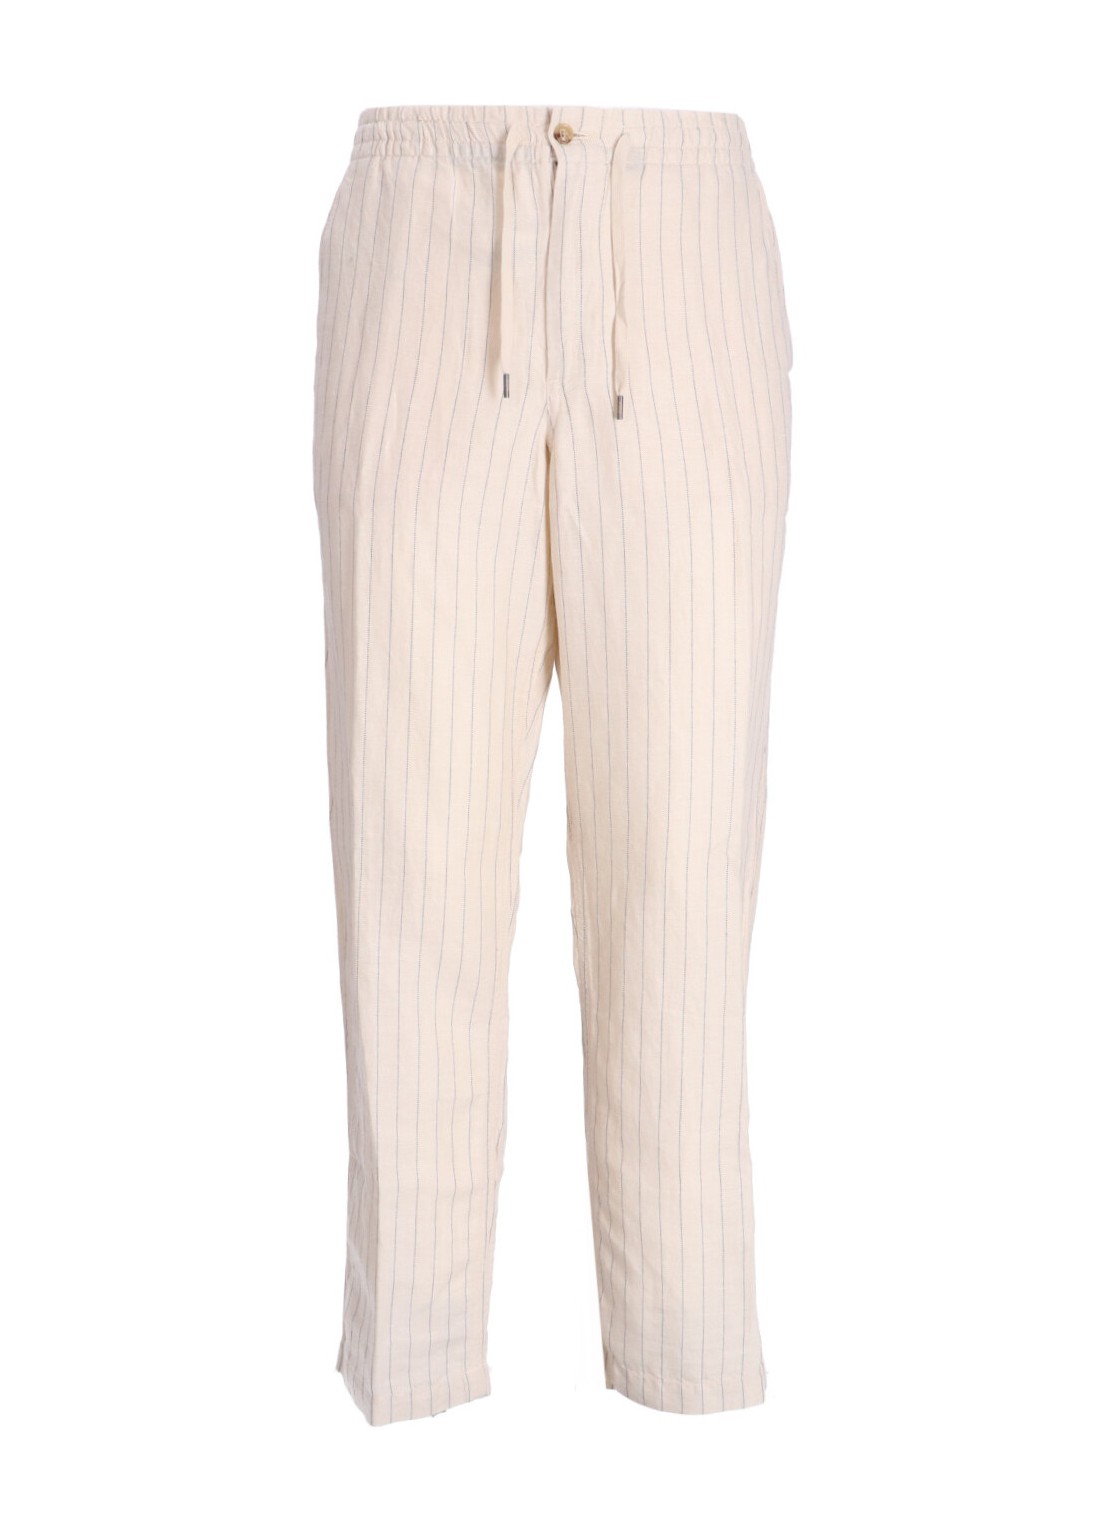 Pantalon polo ralph lauren pant  manprepster v2-flat front - 710927863002 andover cream pinstripe ta